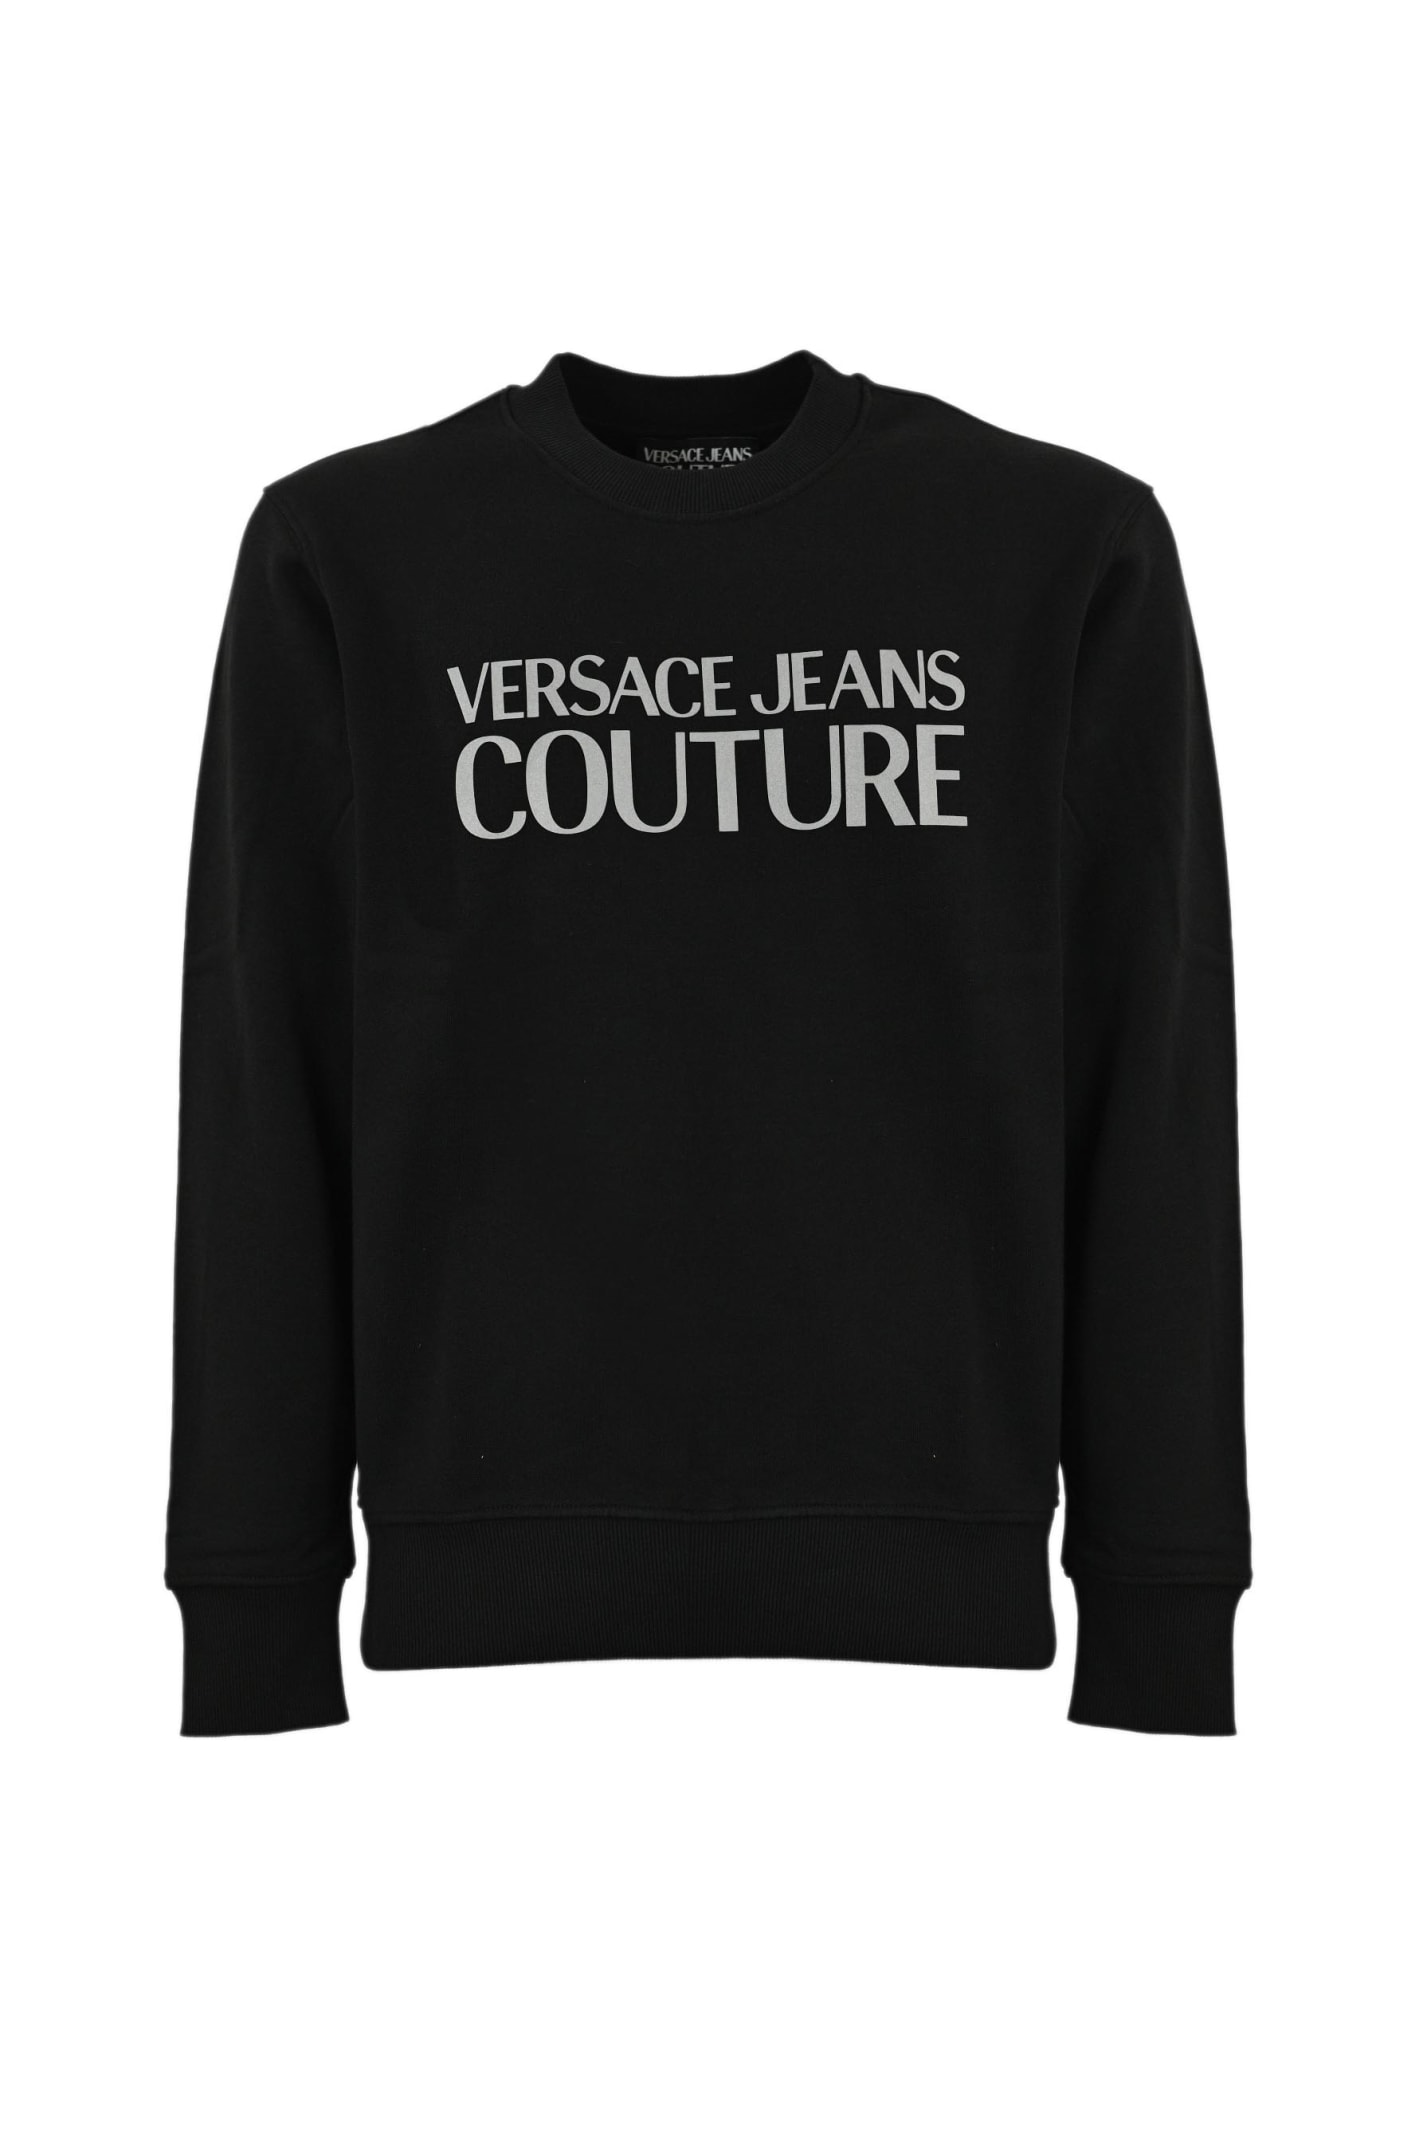 Versace Jeans Couture Crewneck Sweatshirt With Print